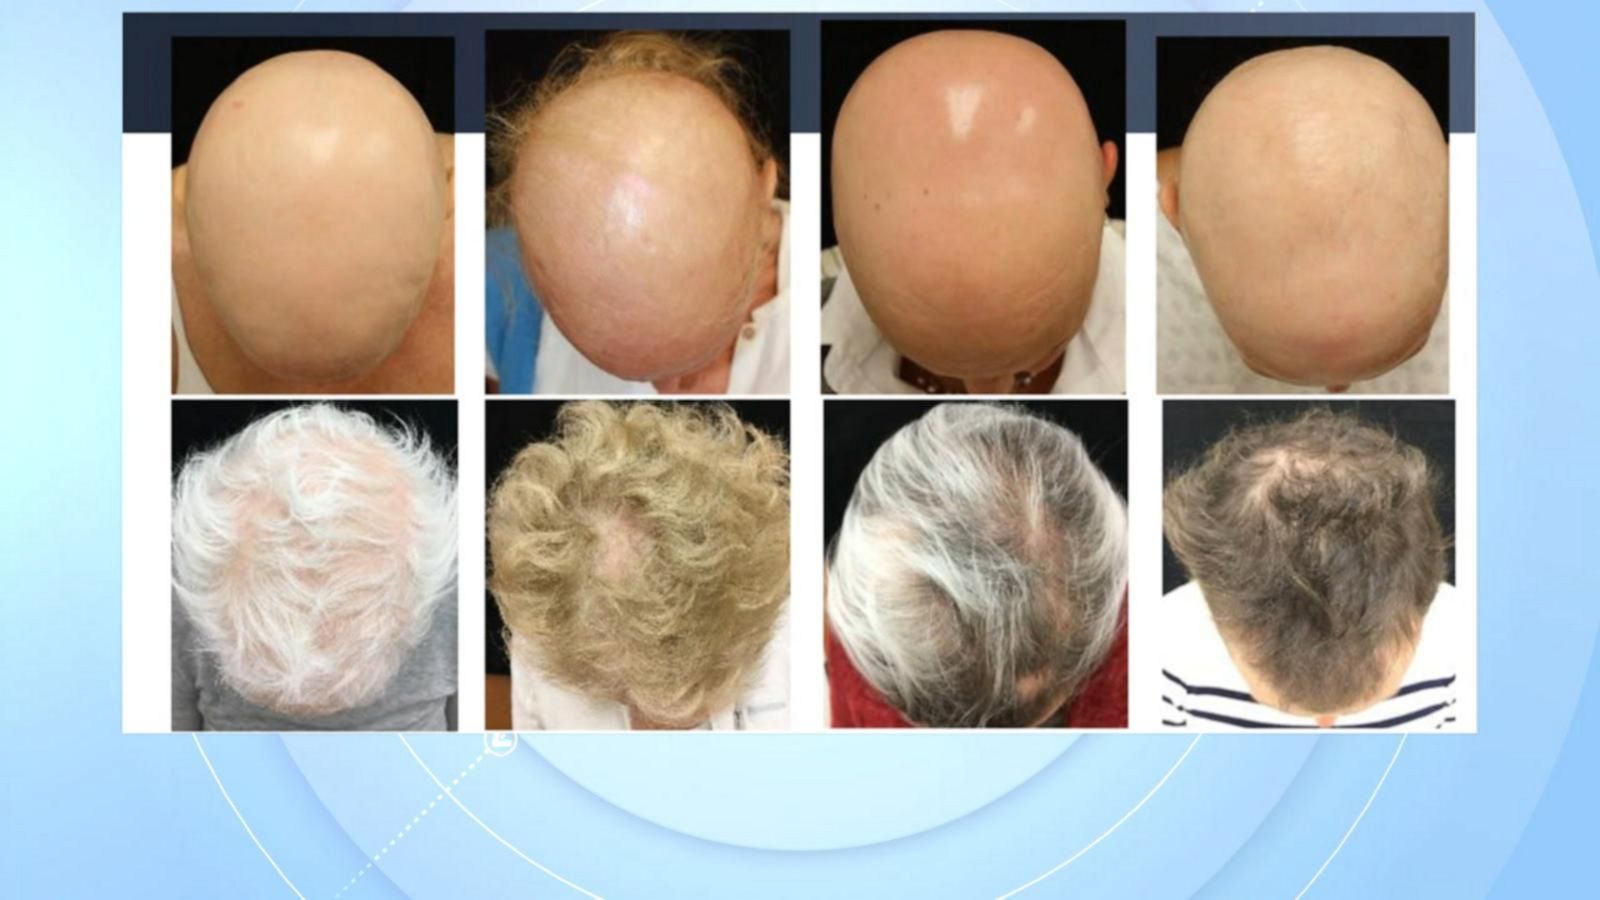 Fda Approves Use Of Olumiant To Help Treat Severe Alopecia Areata